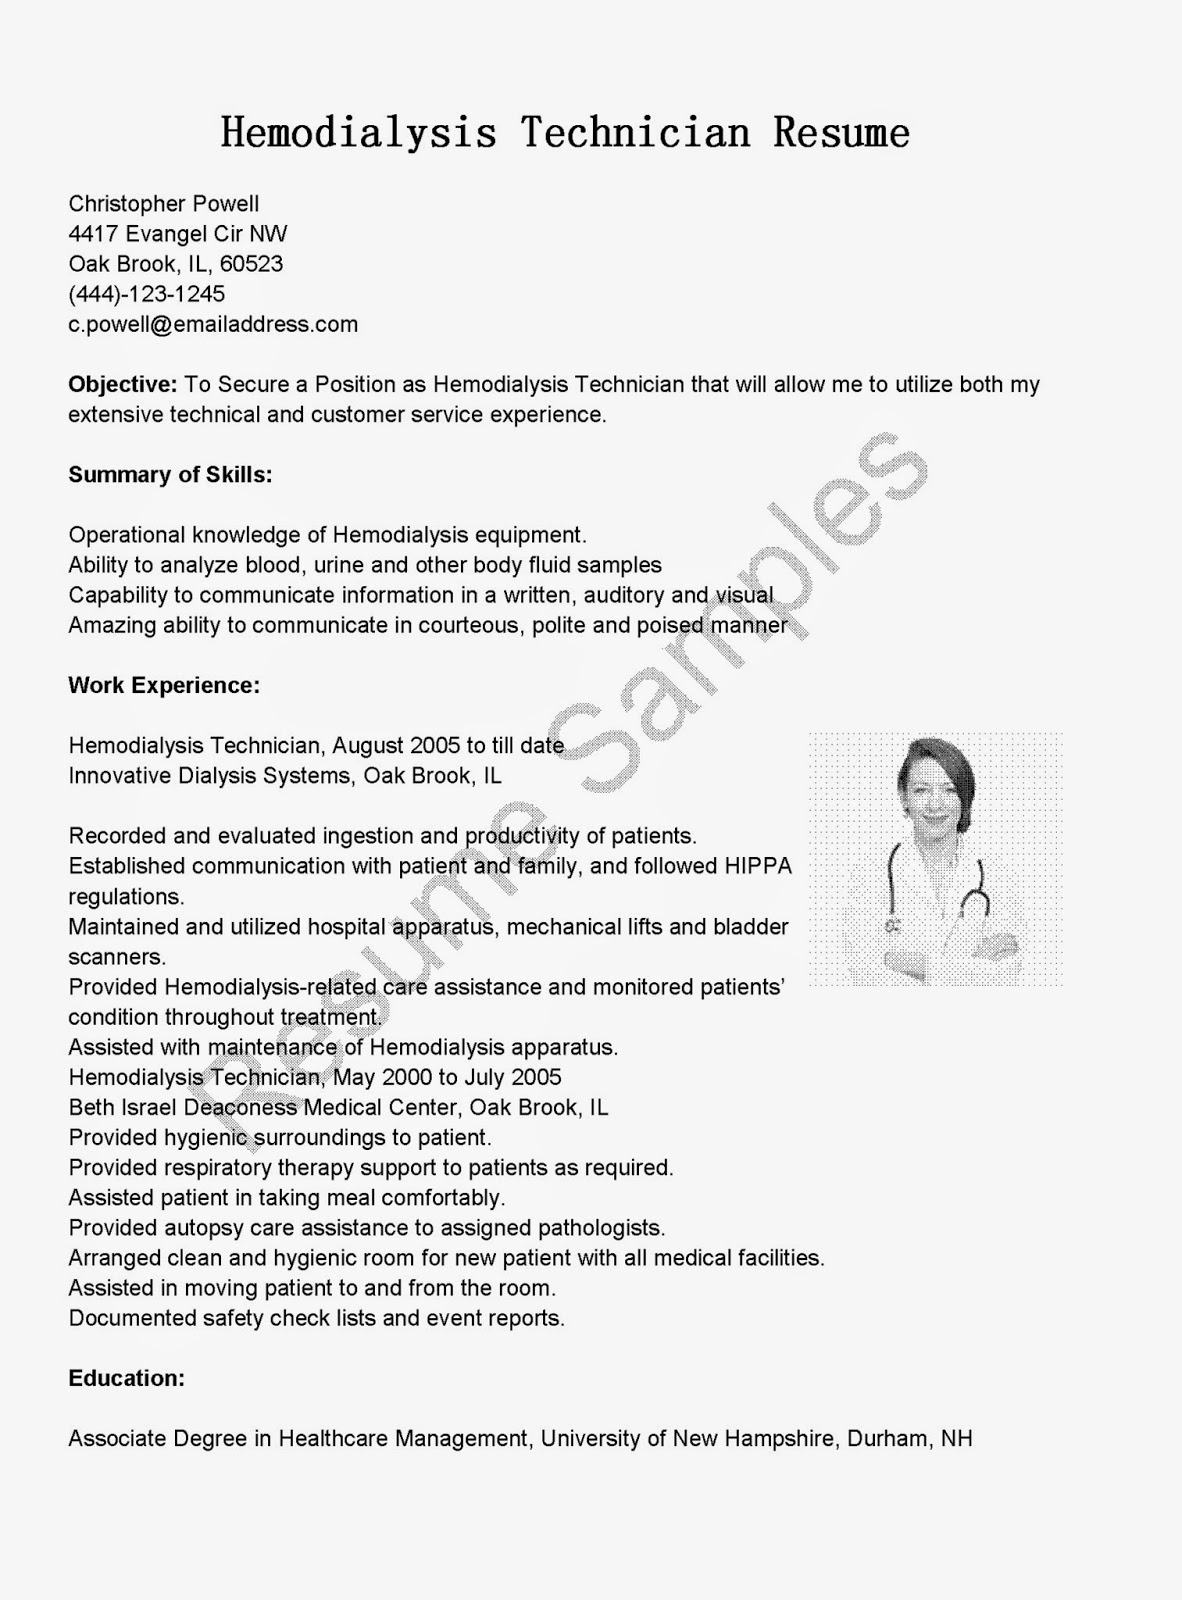 Sample resume format for air hostess